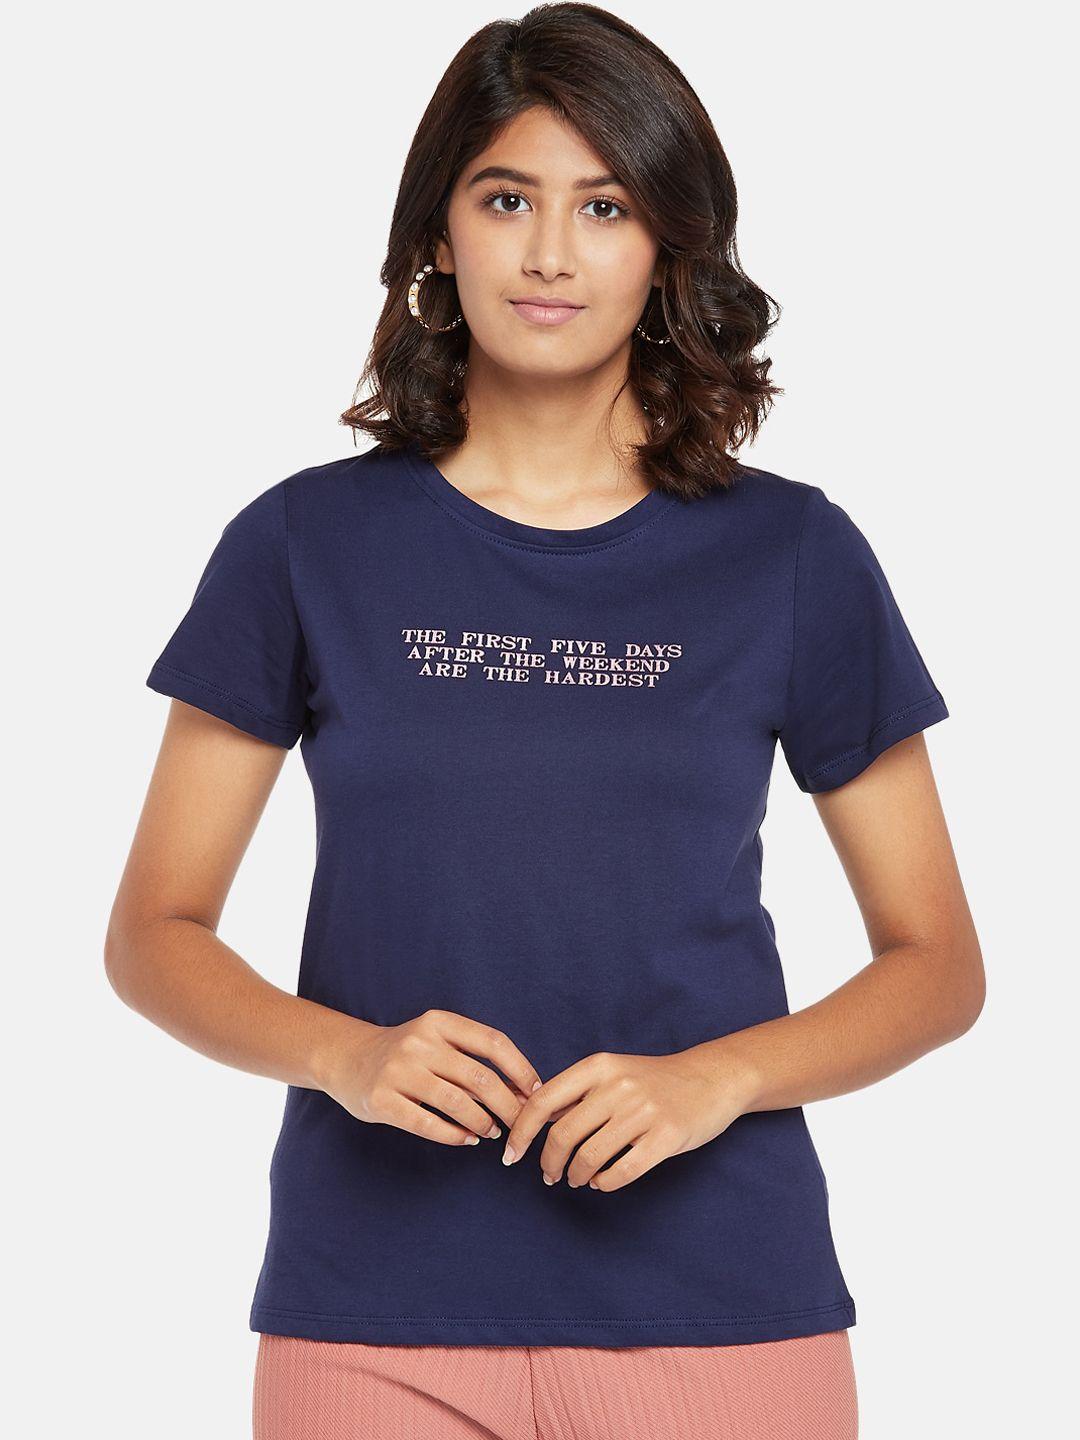 honey by pantaloons women navy blue printed round neck t-shirt